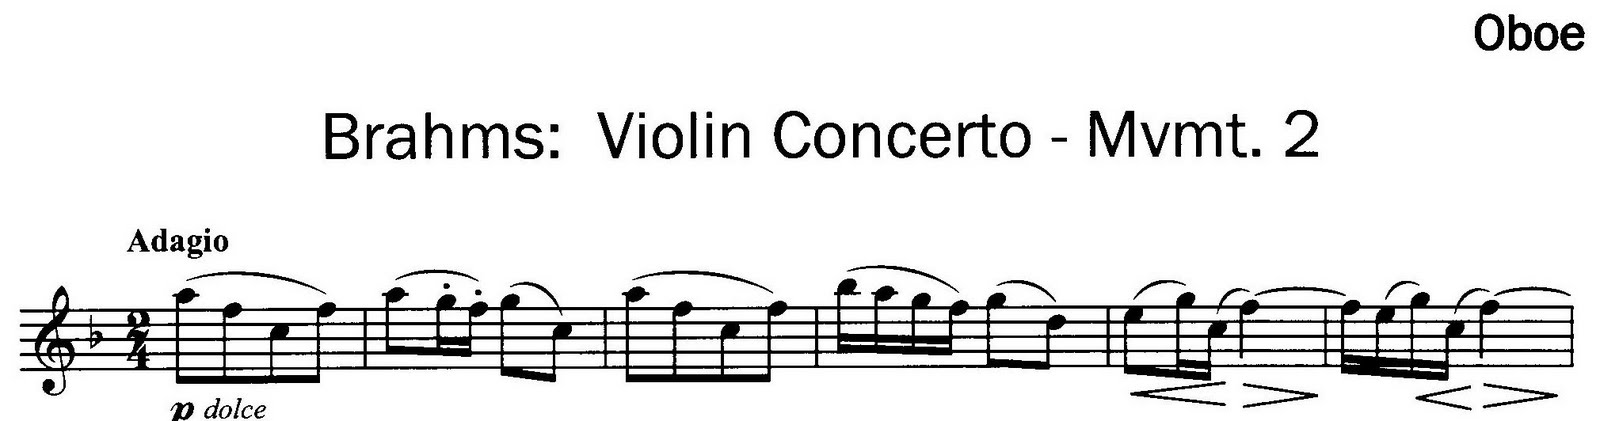 Brahms Violin Sonata No. 3 Program Notes